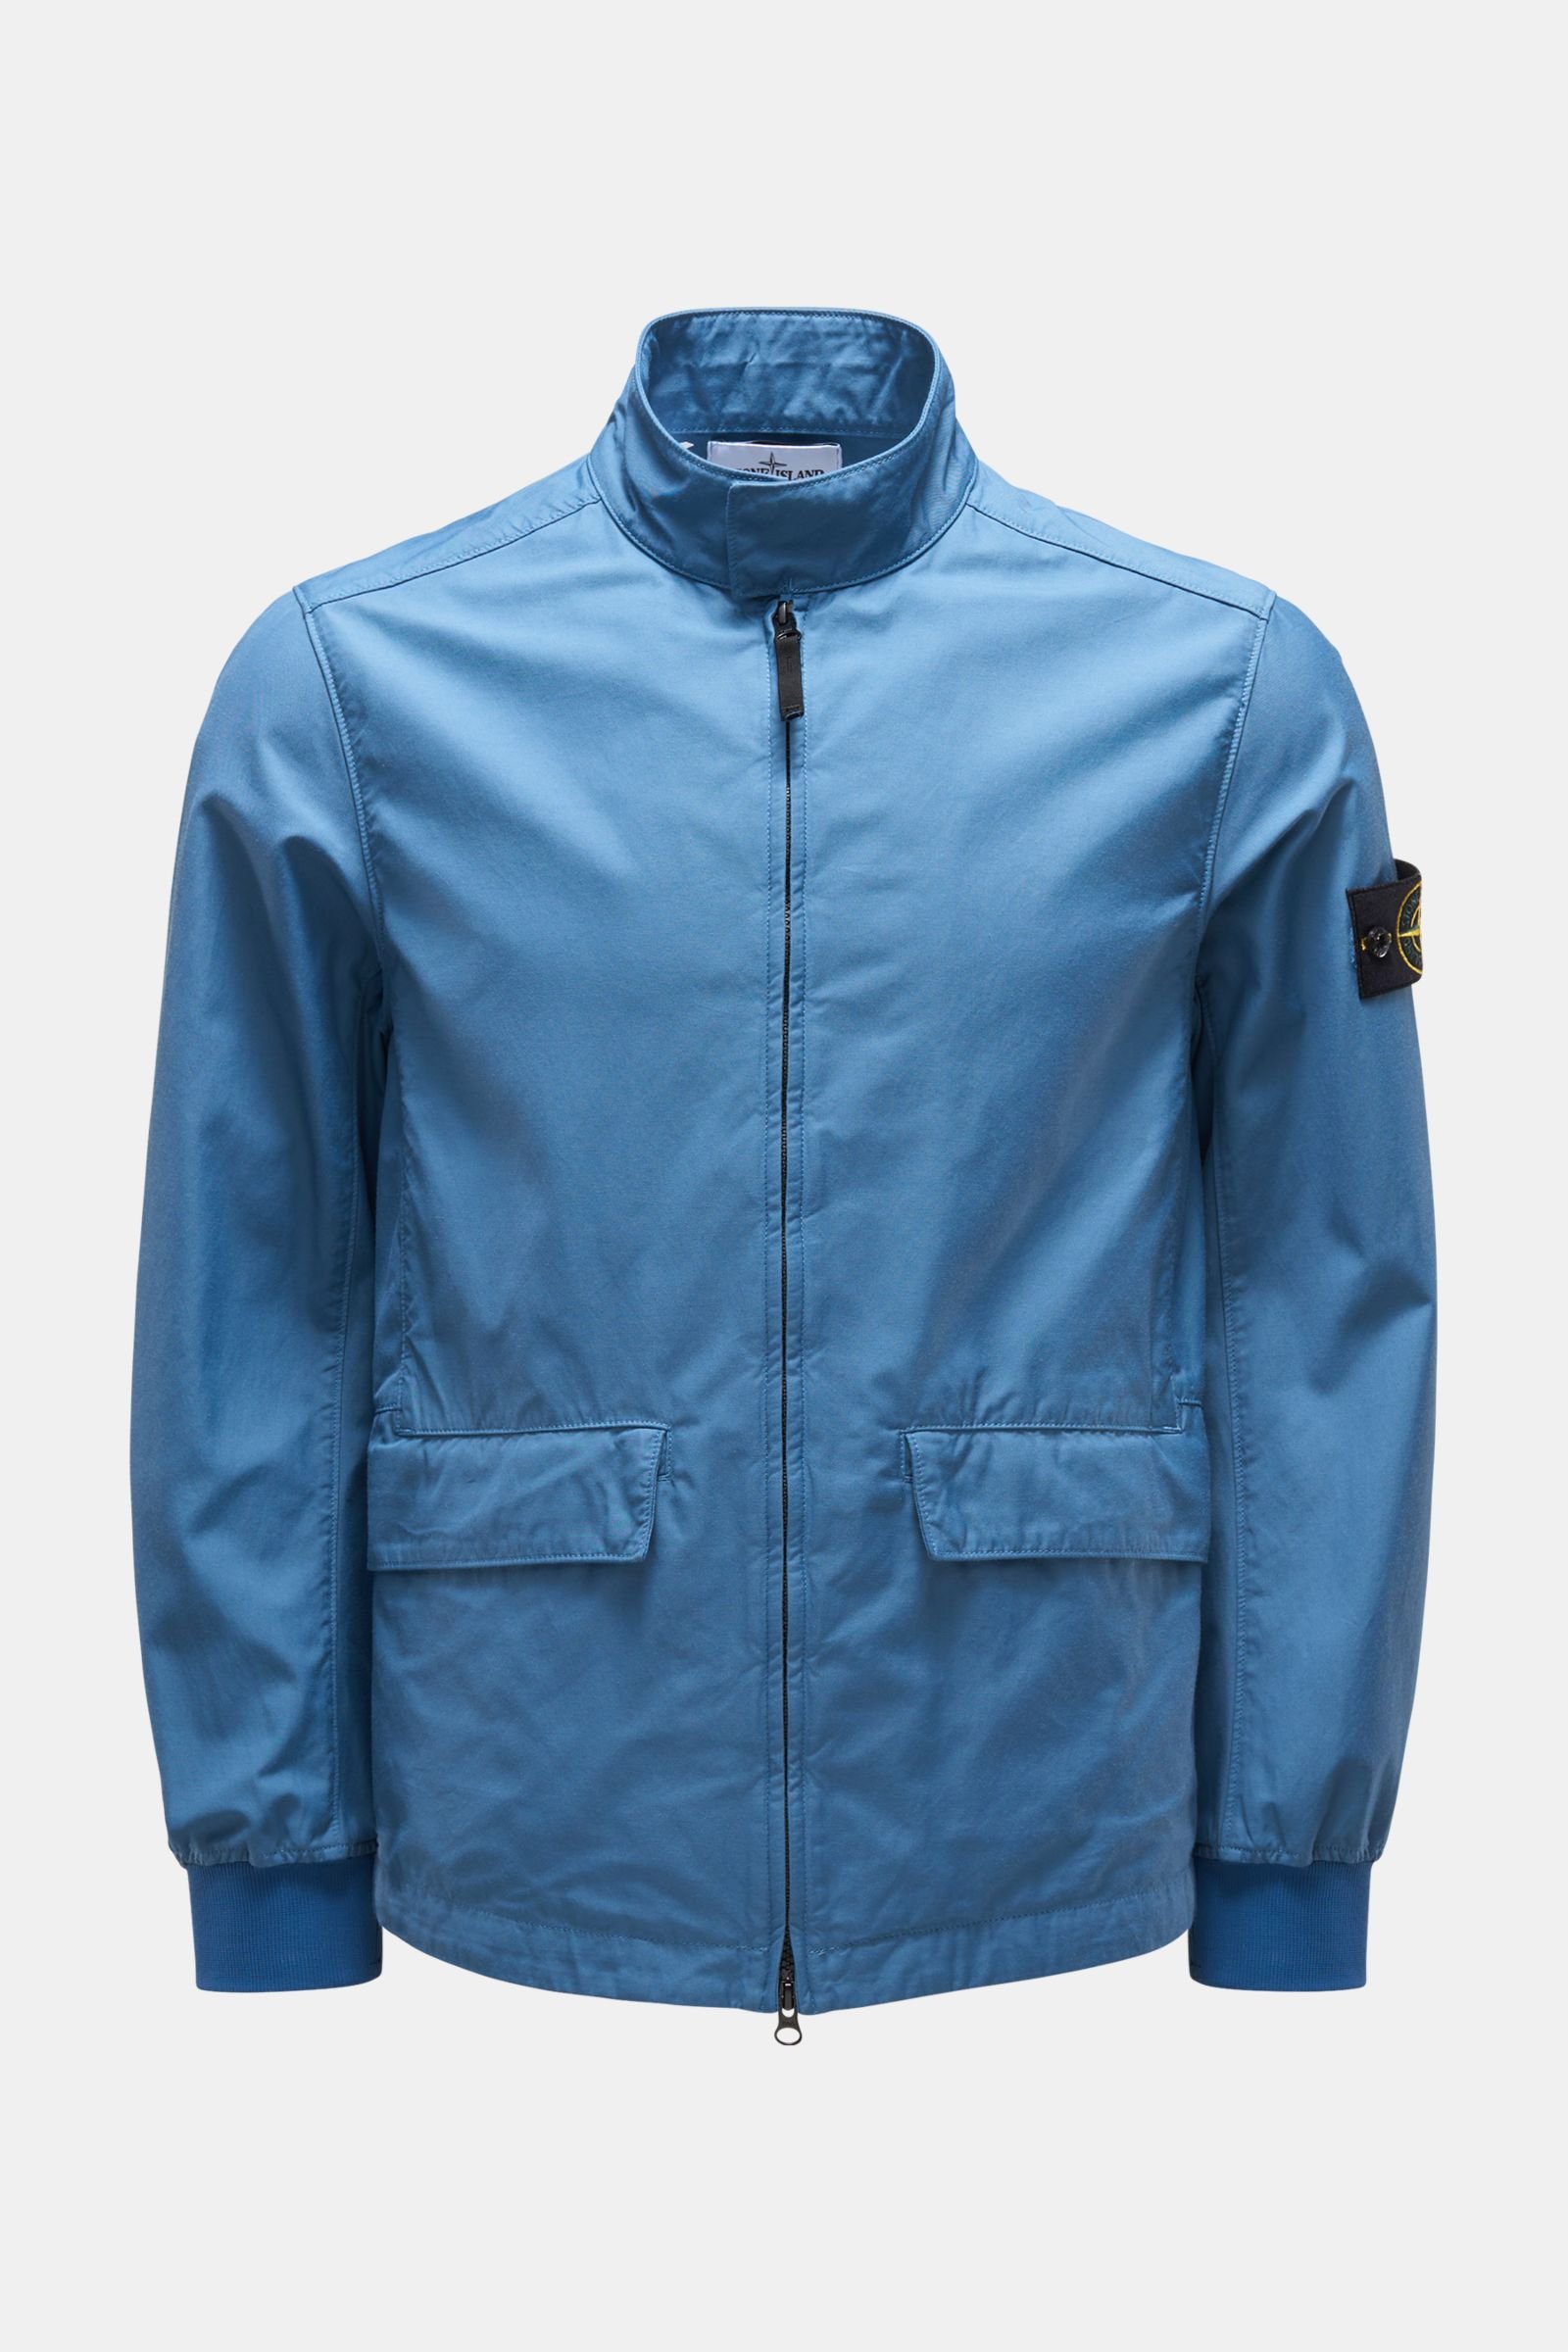 STONE ISLAND jacket 'Nylon Cotton Batavia 2/2-TC' smoky blue | BRAUN Hamburg